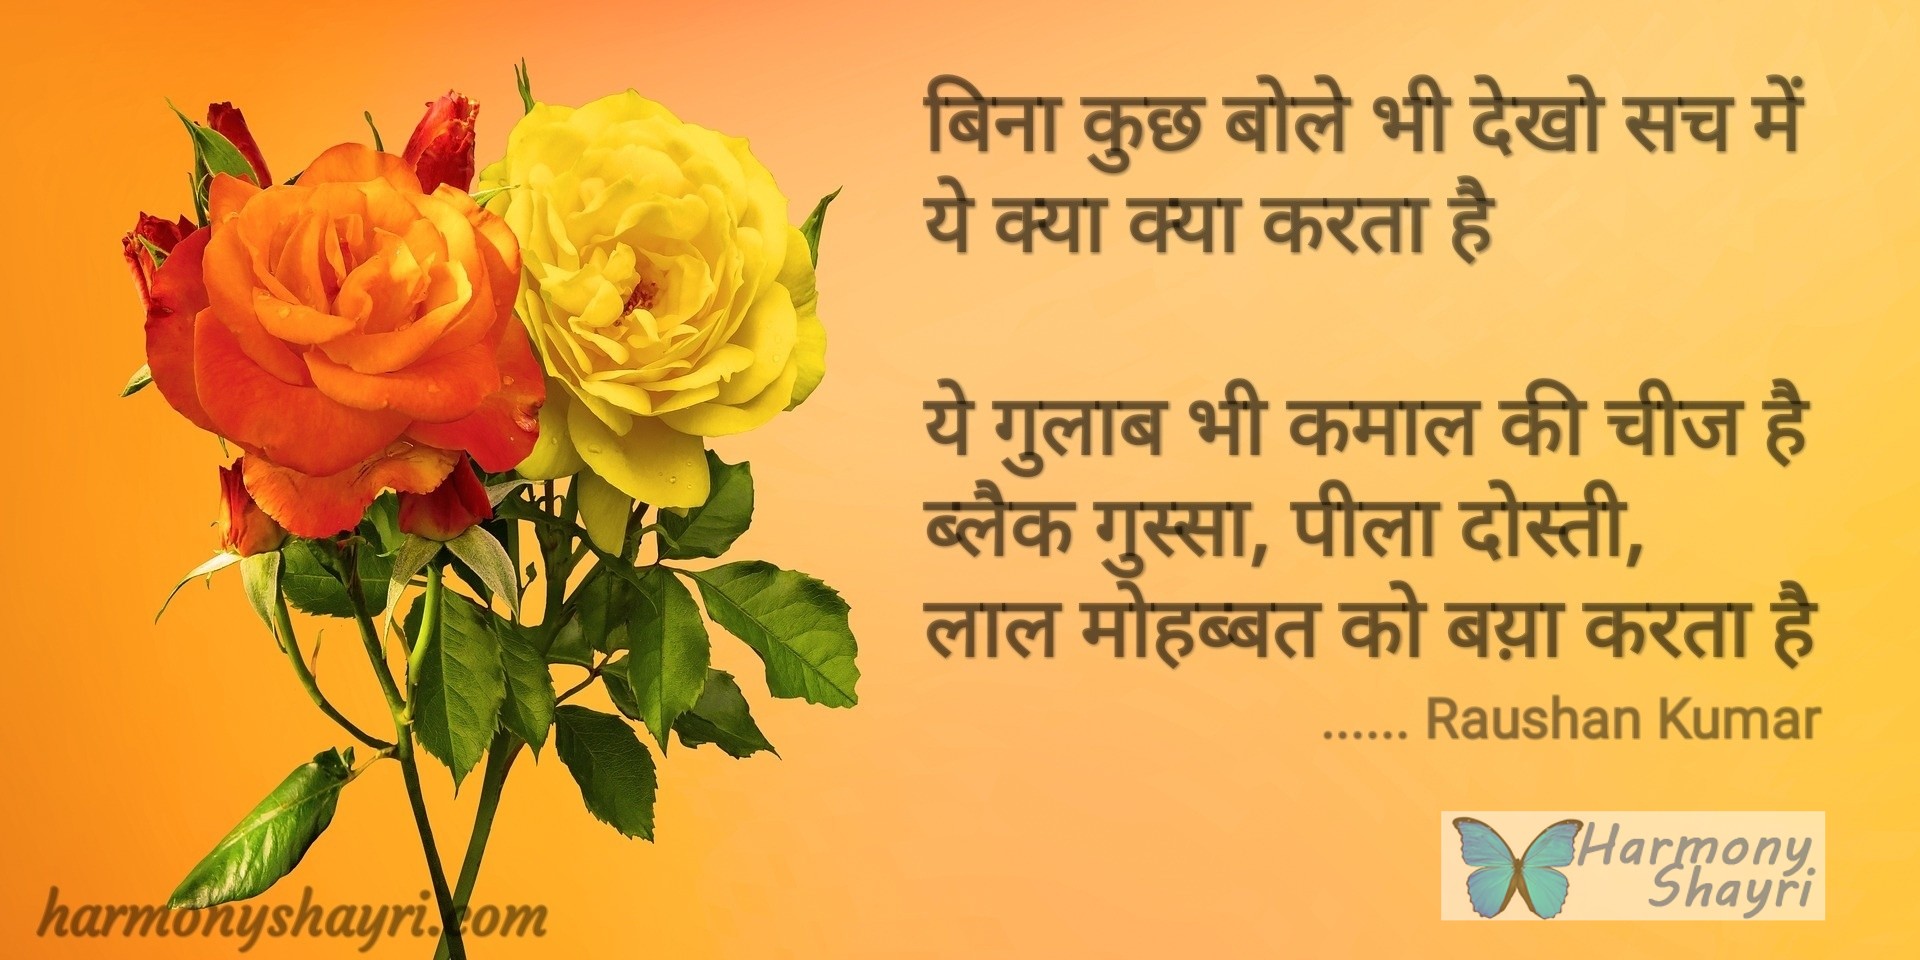 Happy Rose Day – Raushan Kumar